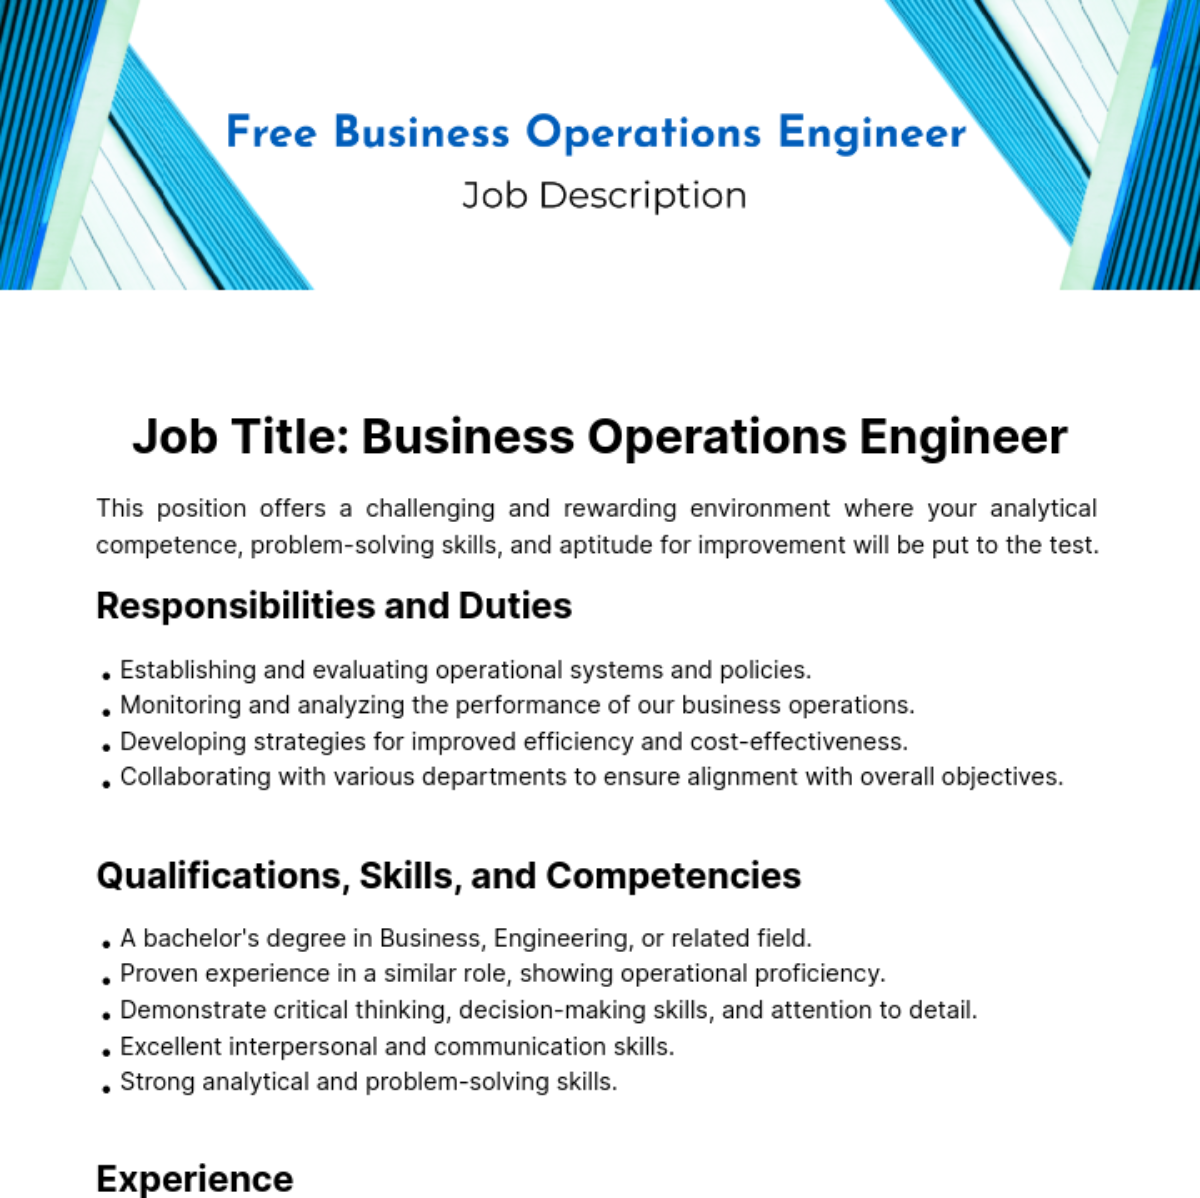 Free Business Operations Engineer Job Description Template